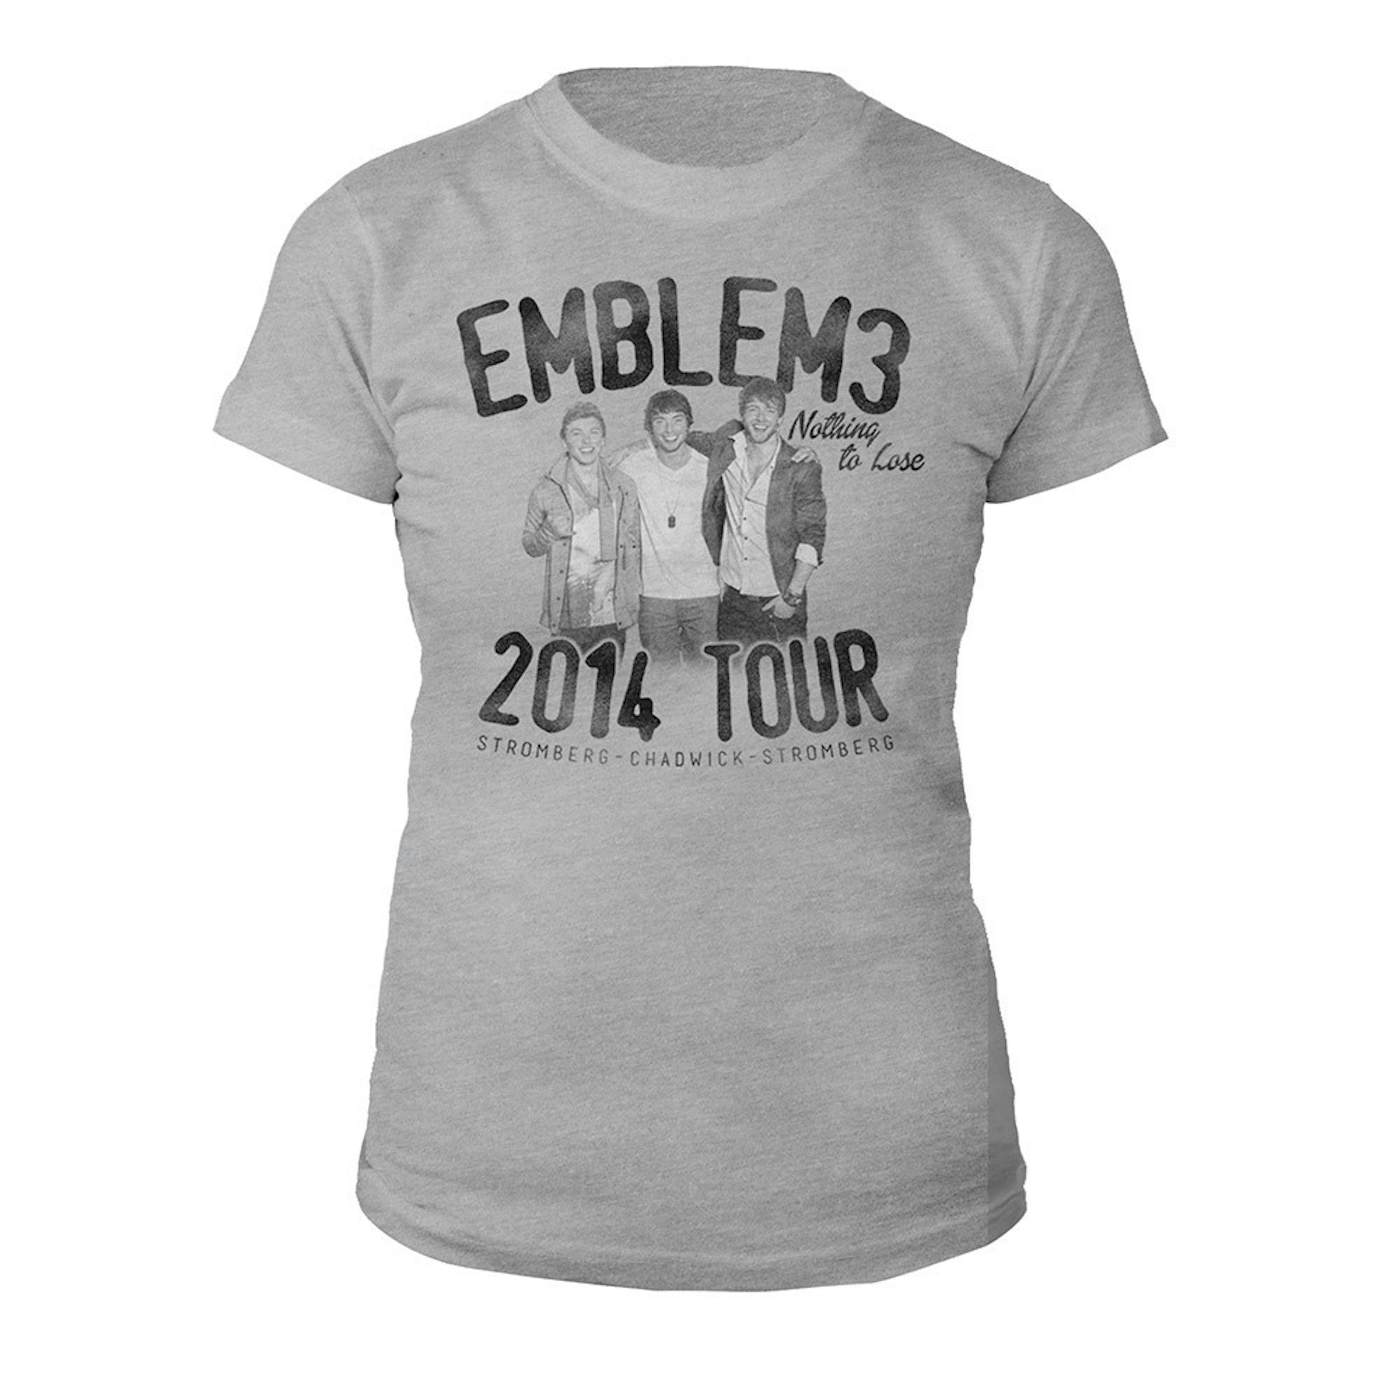 Emblem3 Nothing To Lose Girl's  Tour Tee